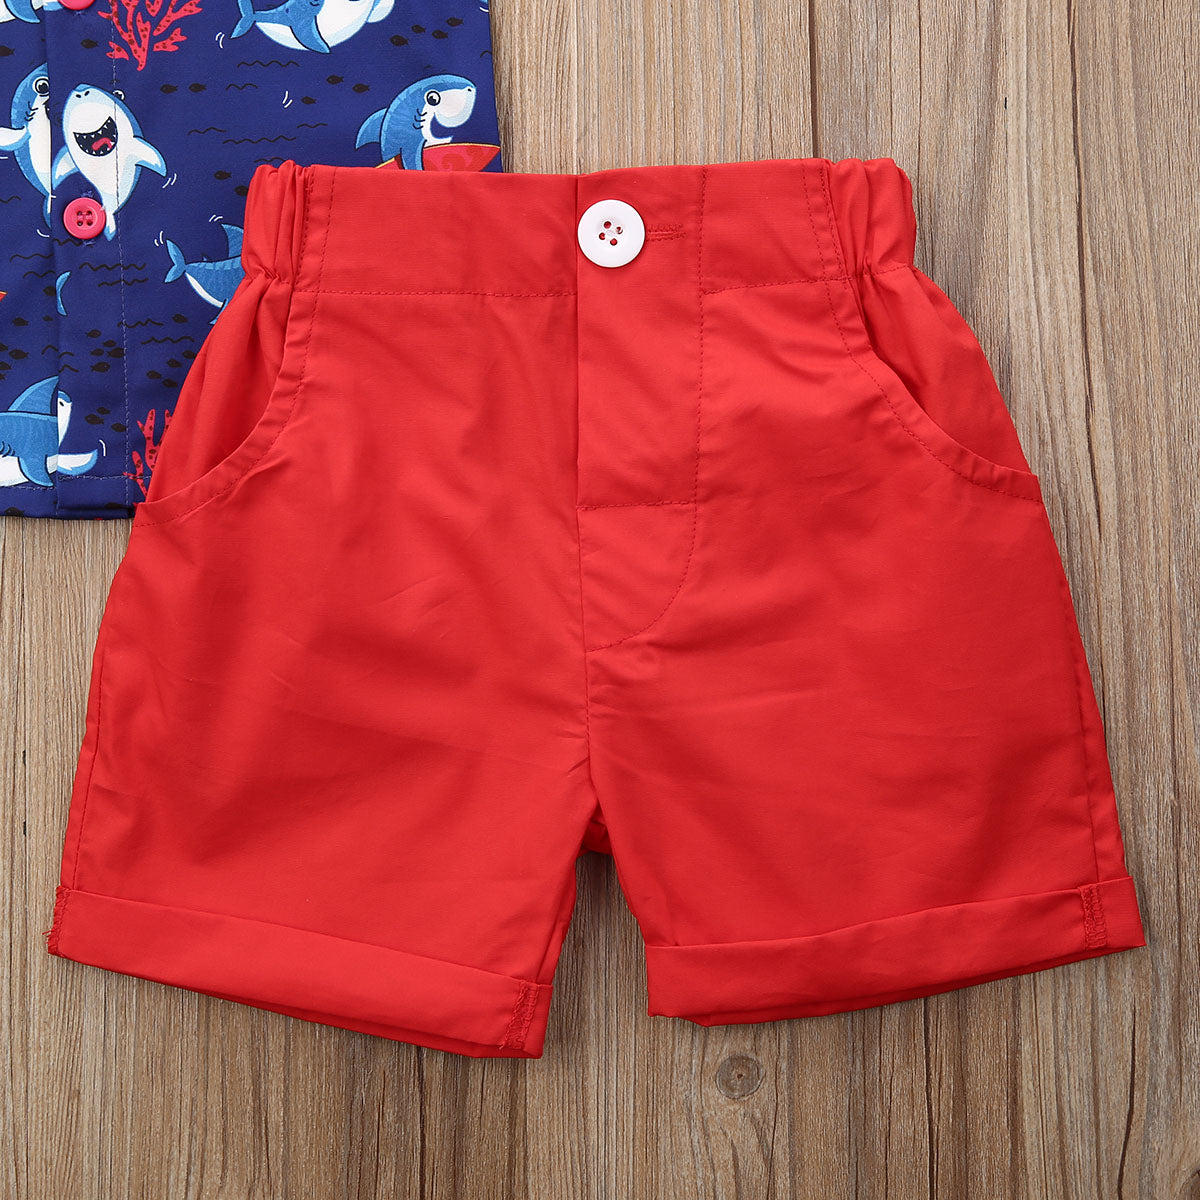 Cool Shark Red Shorts Set